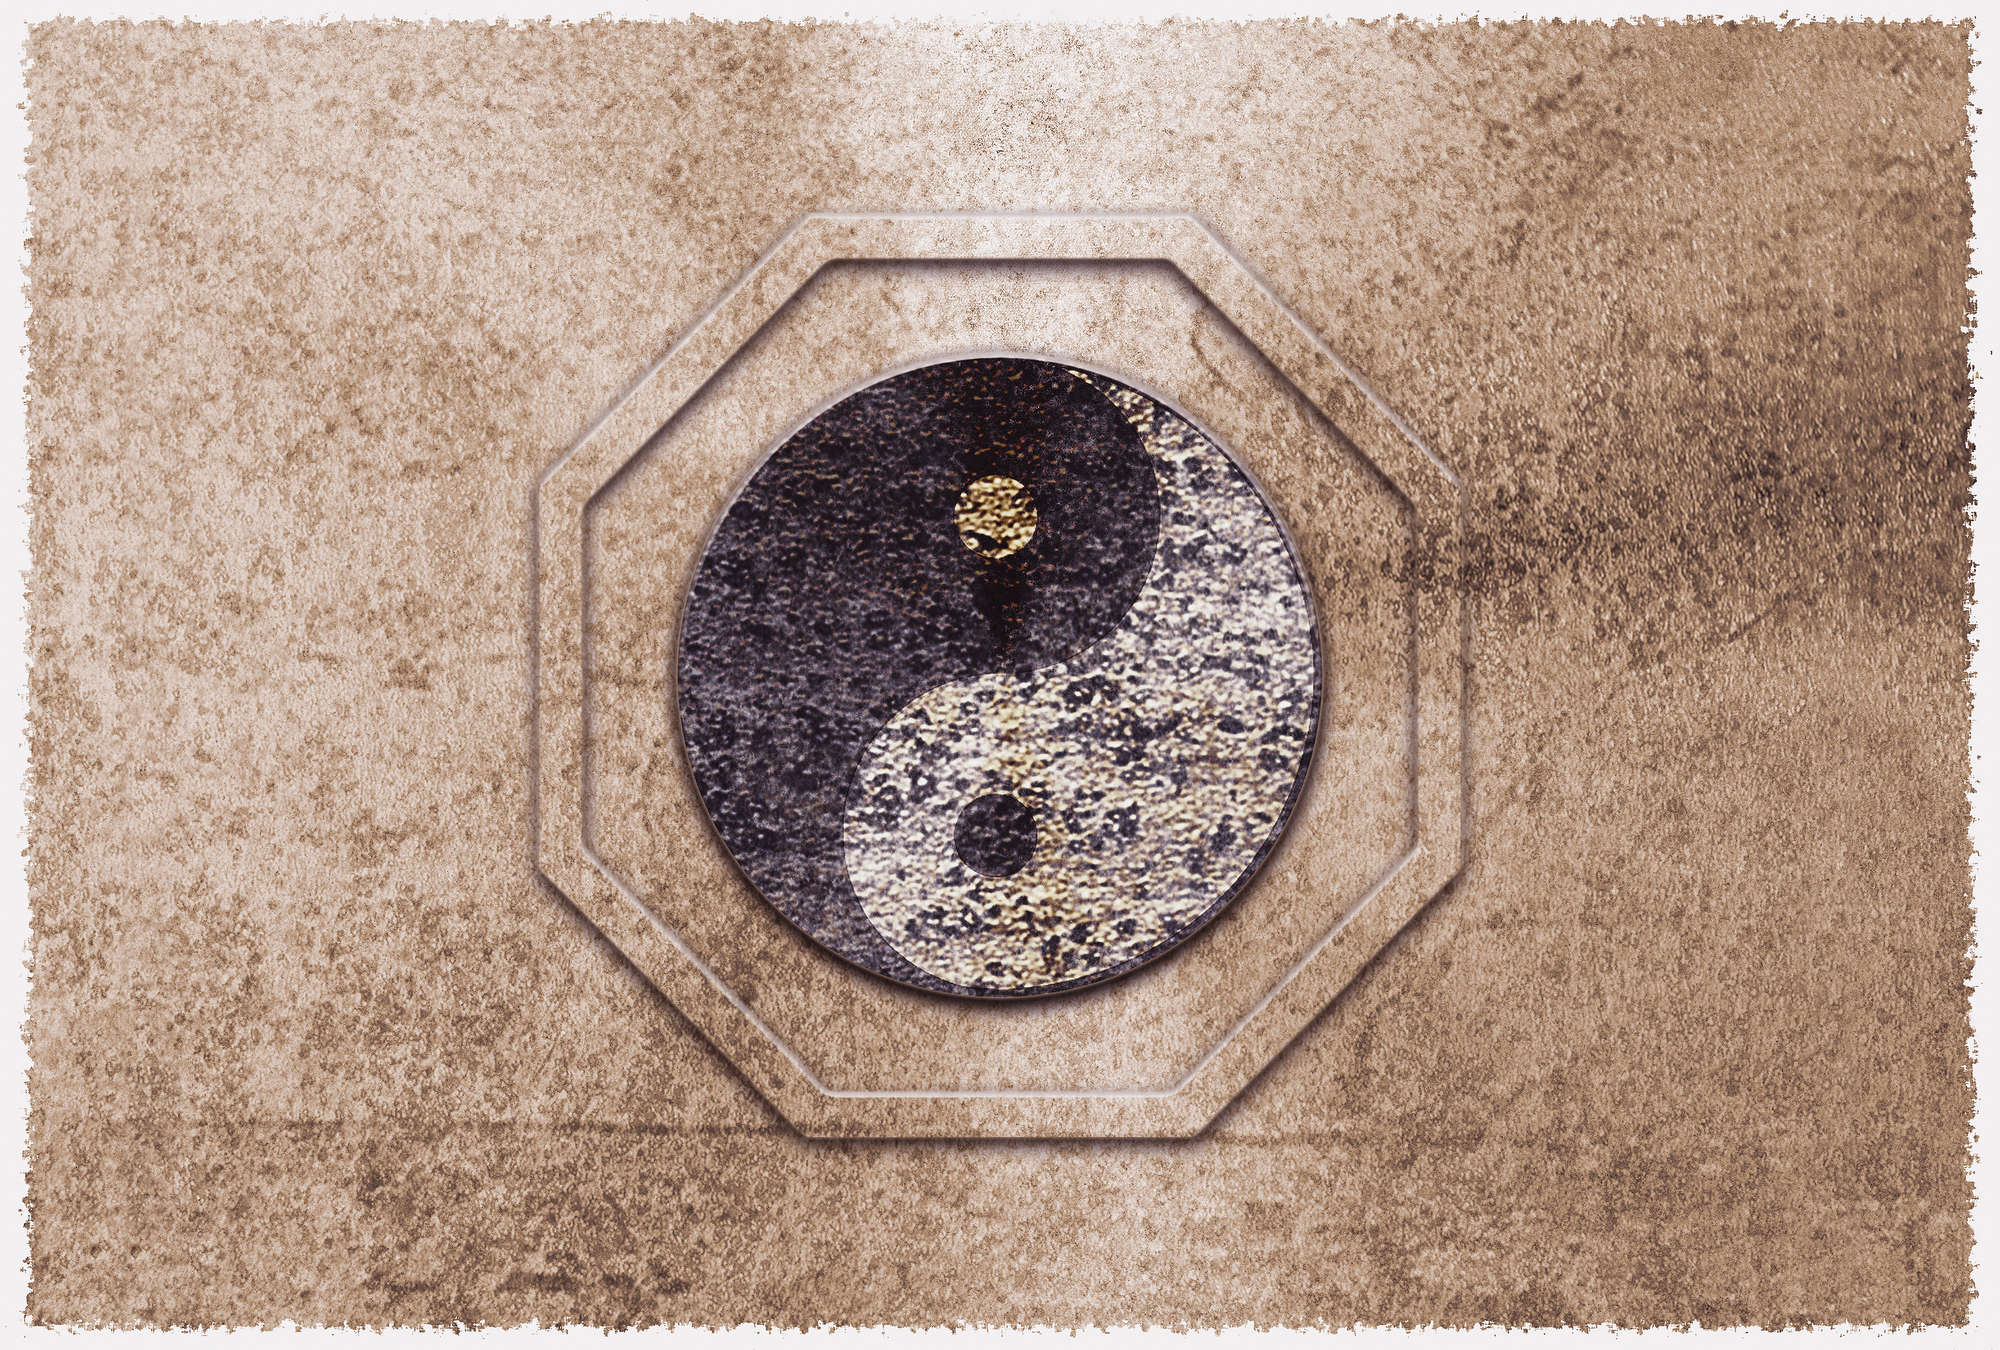             Muurschildering Yin&Yang, Aziatisch harmonie symbool - Bruin, Zwart, Wit
        